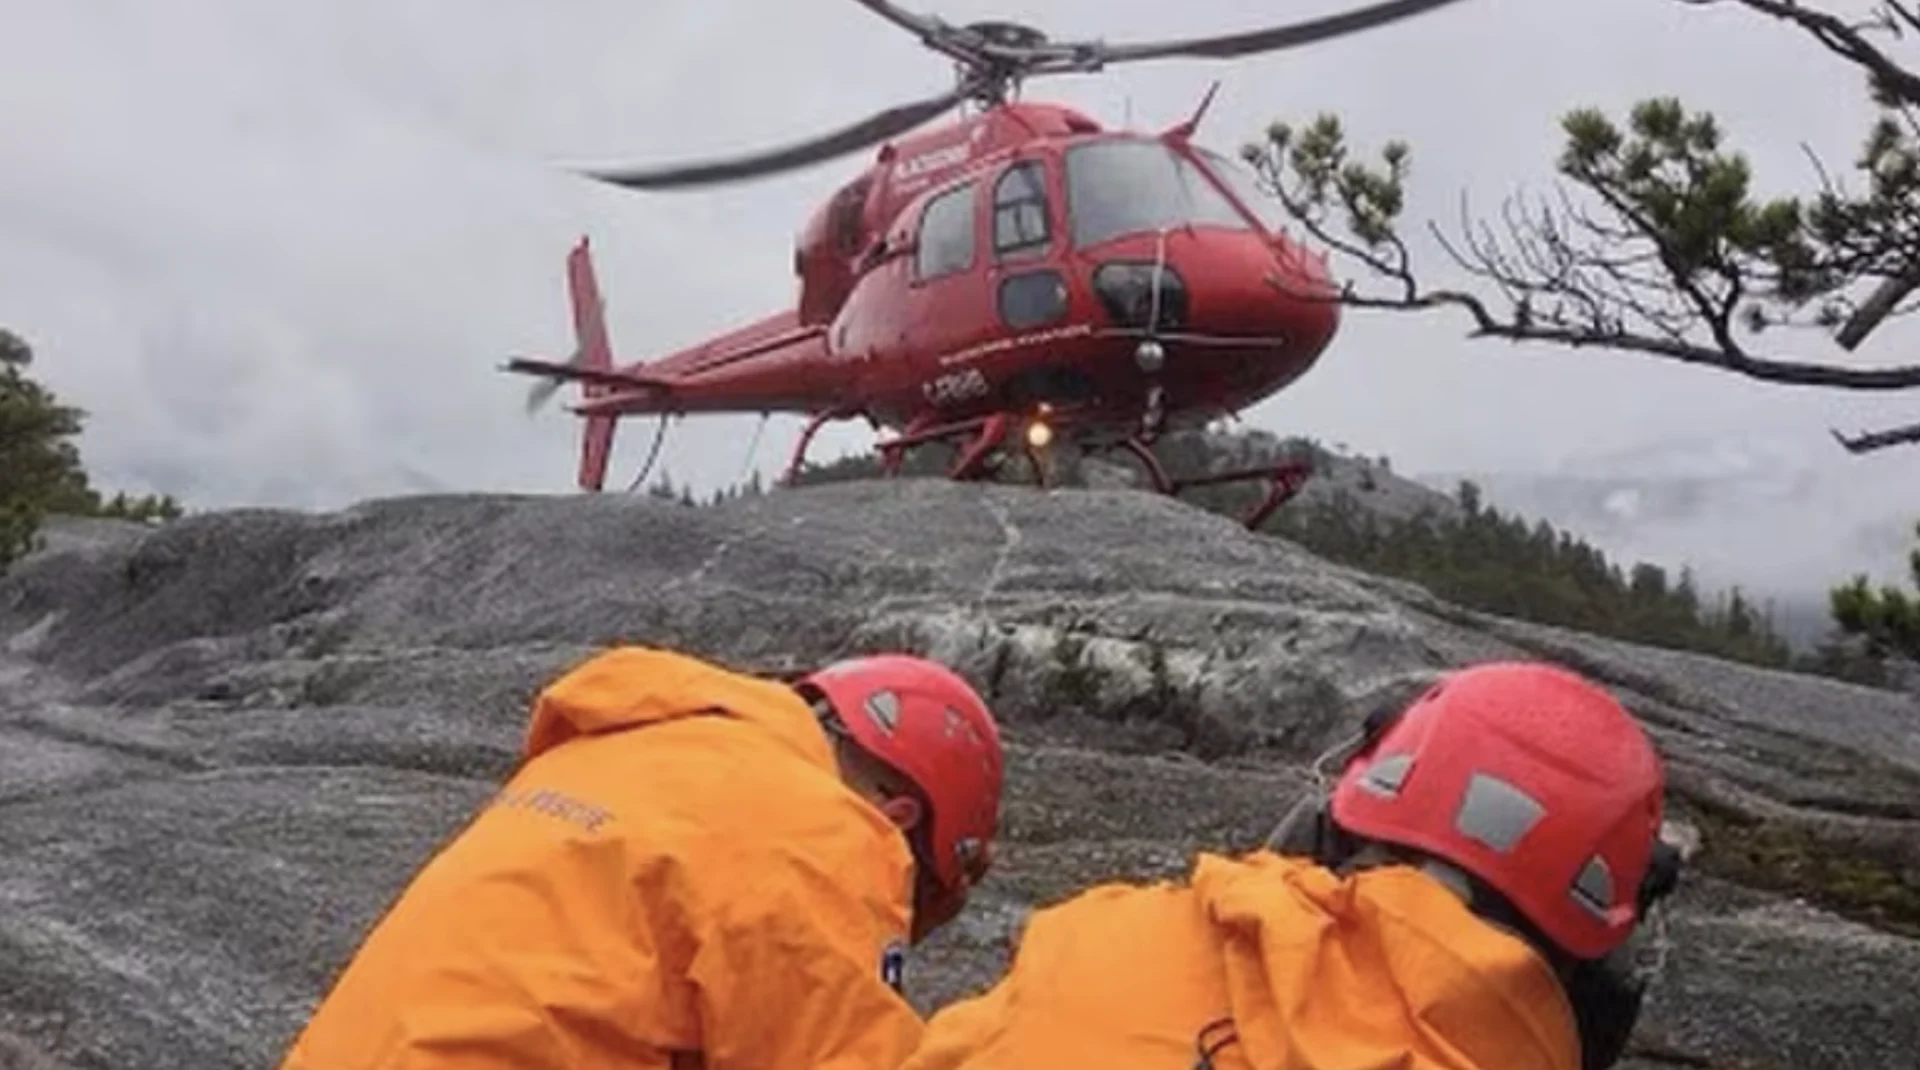 Bodies of 3 missing climbers found near Squamish, B.C.